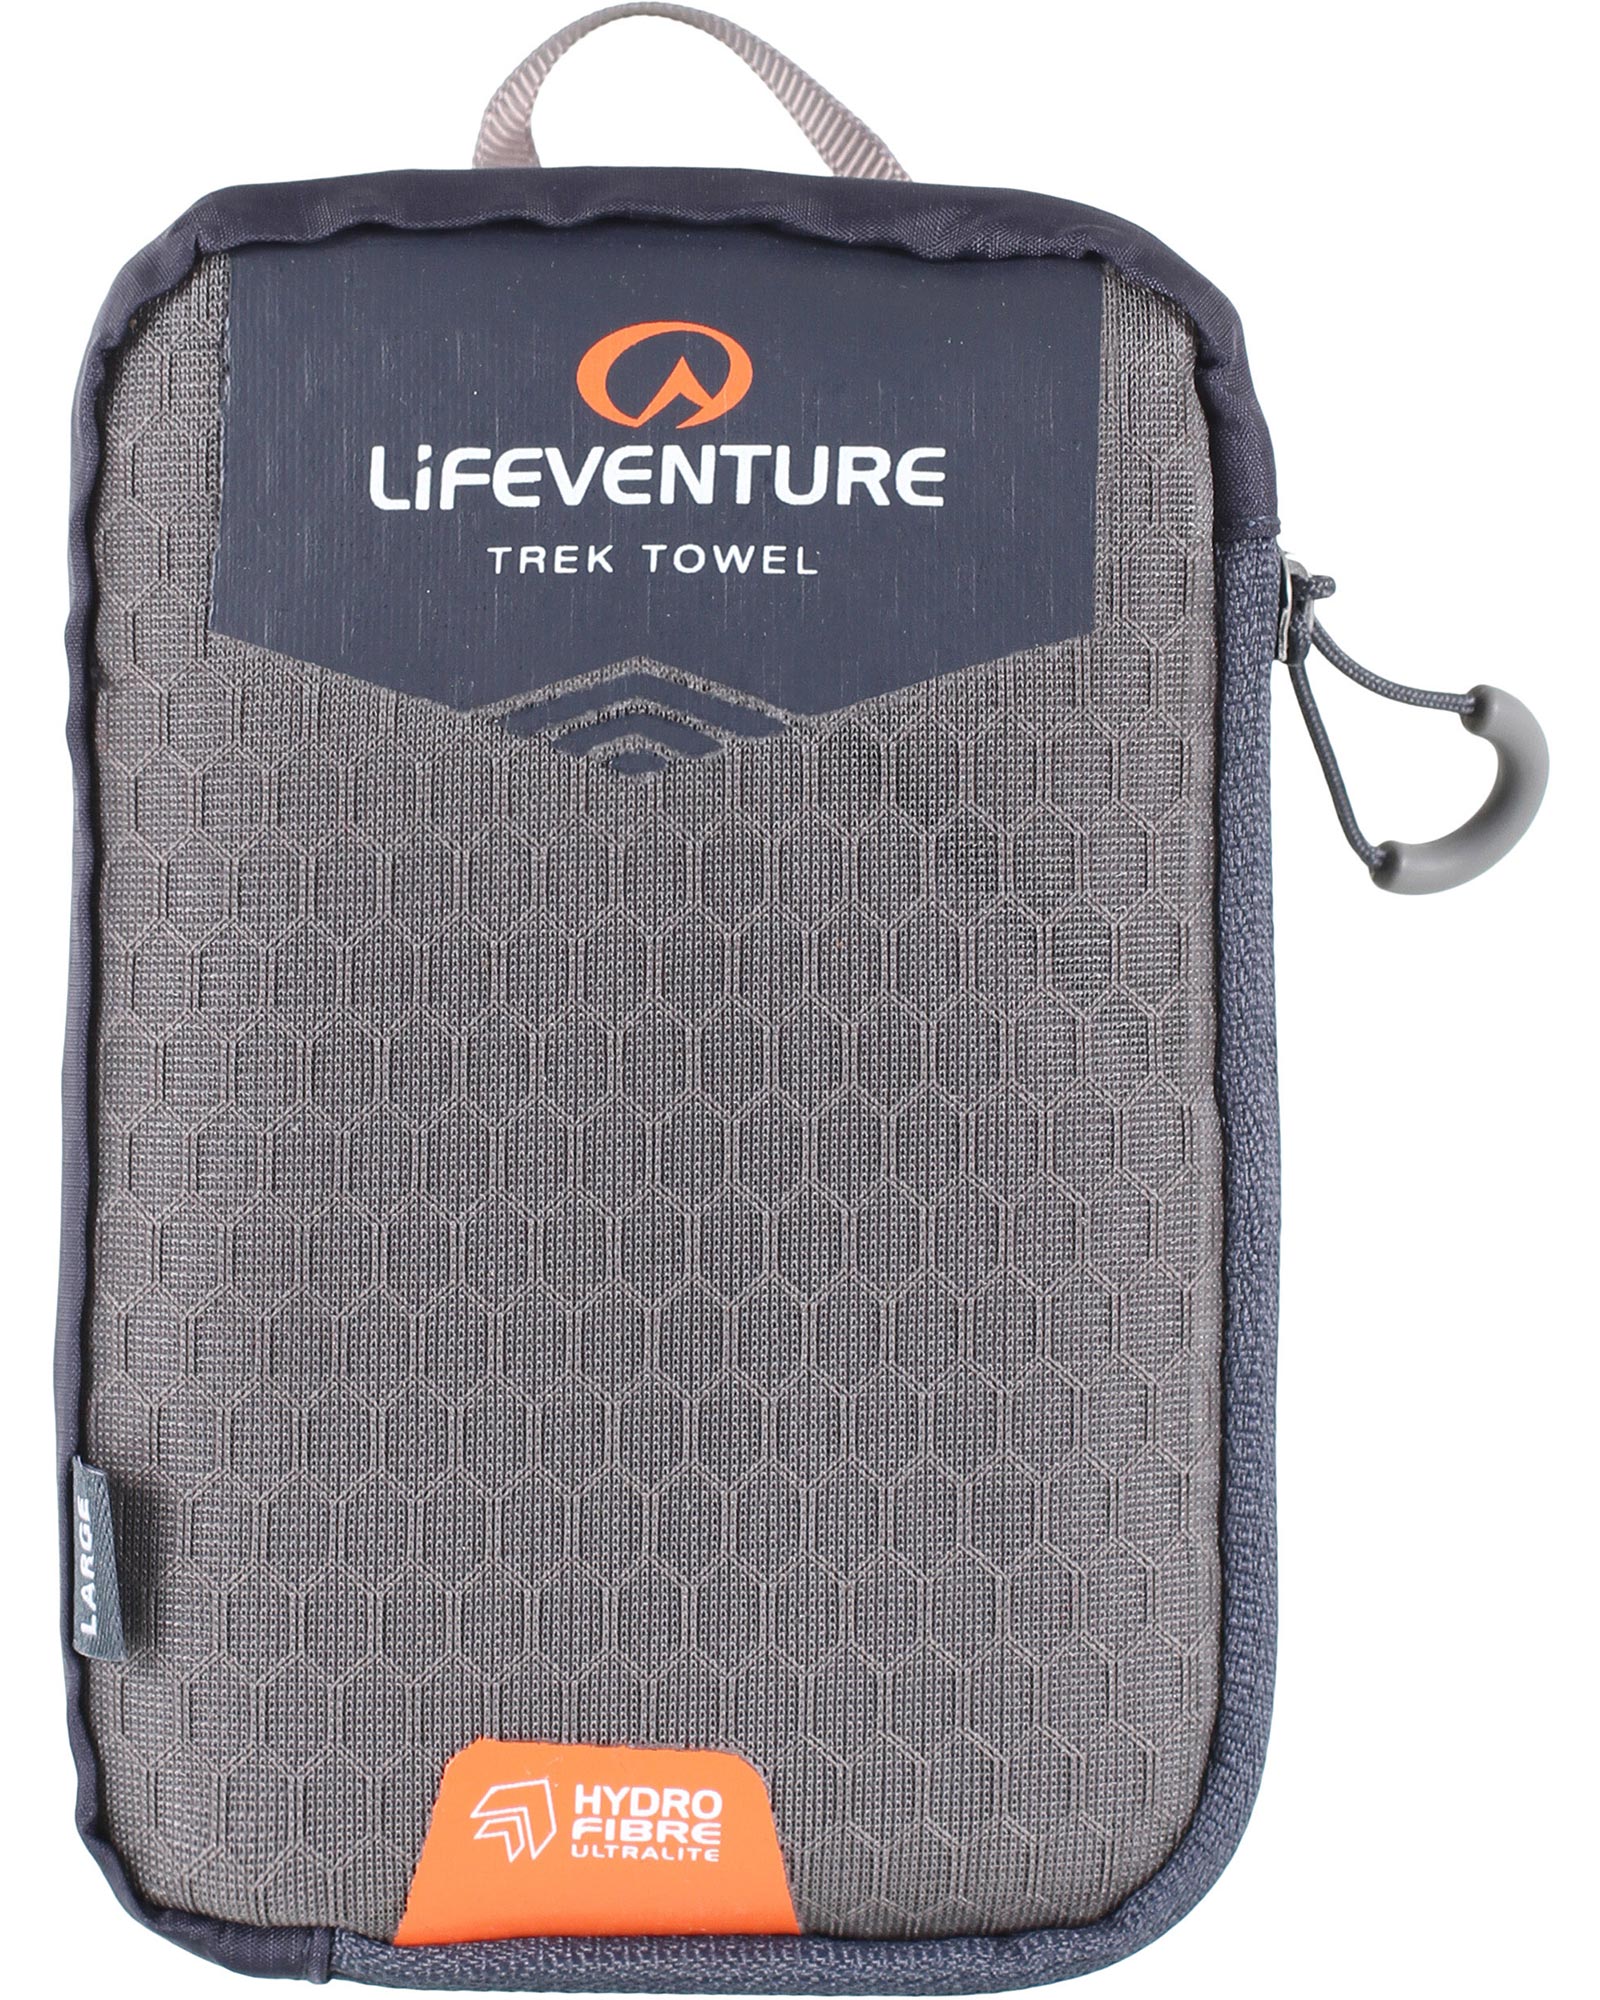 Lifeventure Hydrofibre Trek Towel - Large